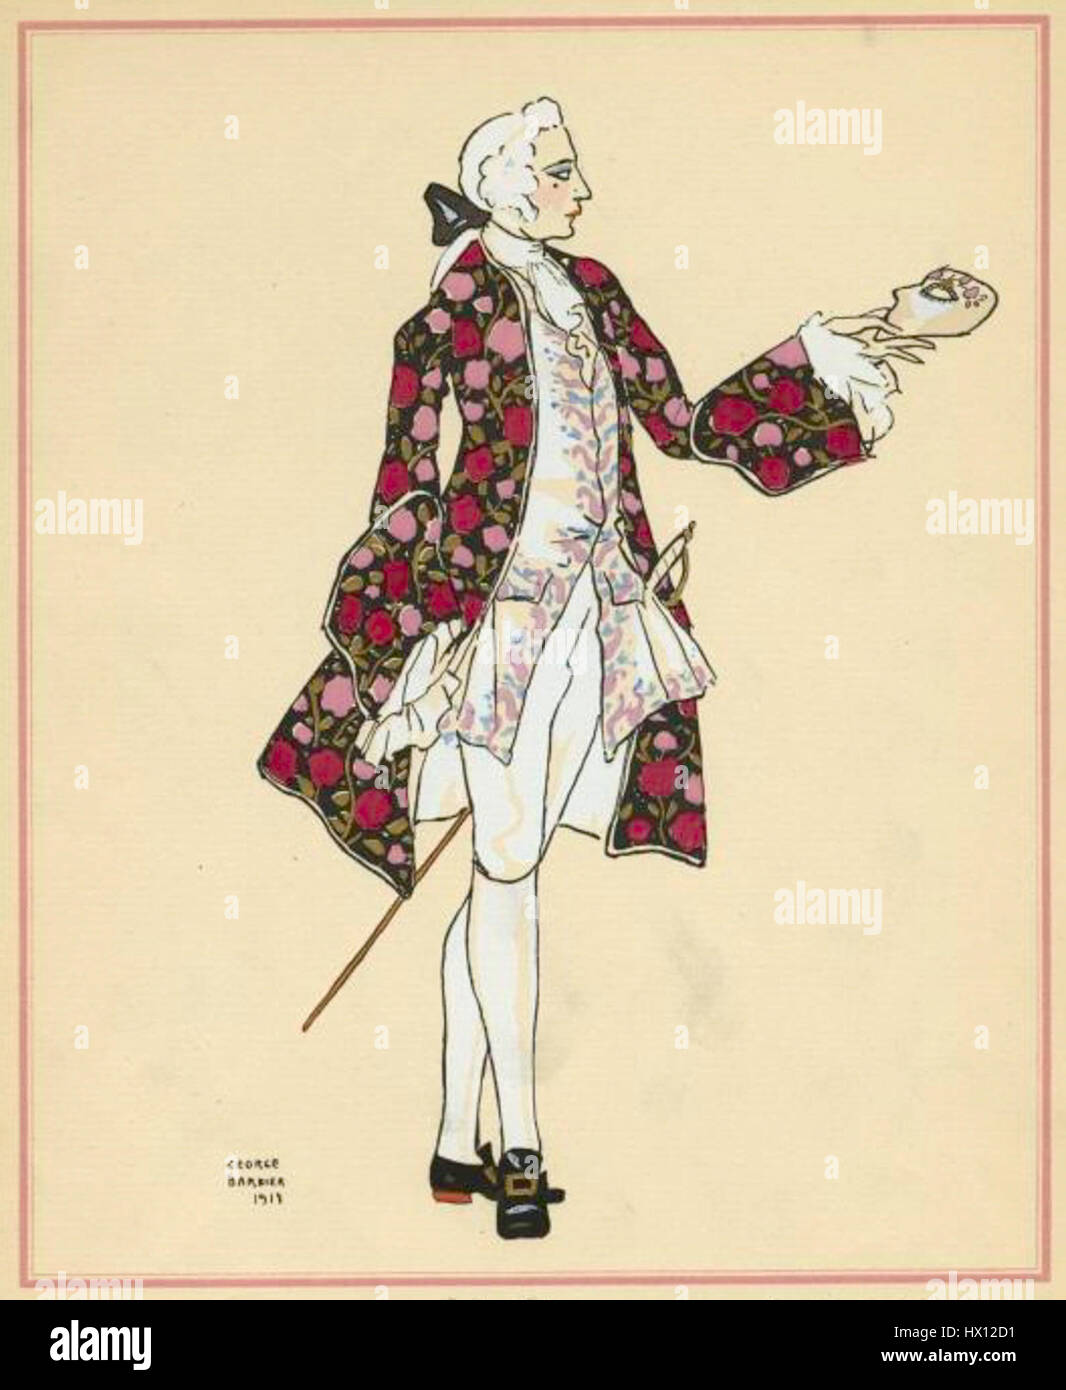 Costume per Maurice Rostand's Casanova da George Barbier Foto stock - Alamy